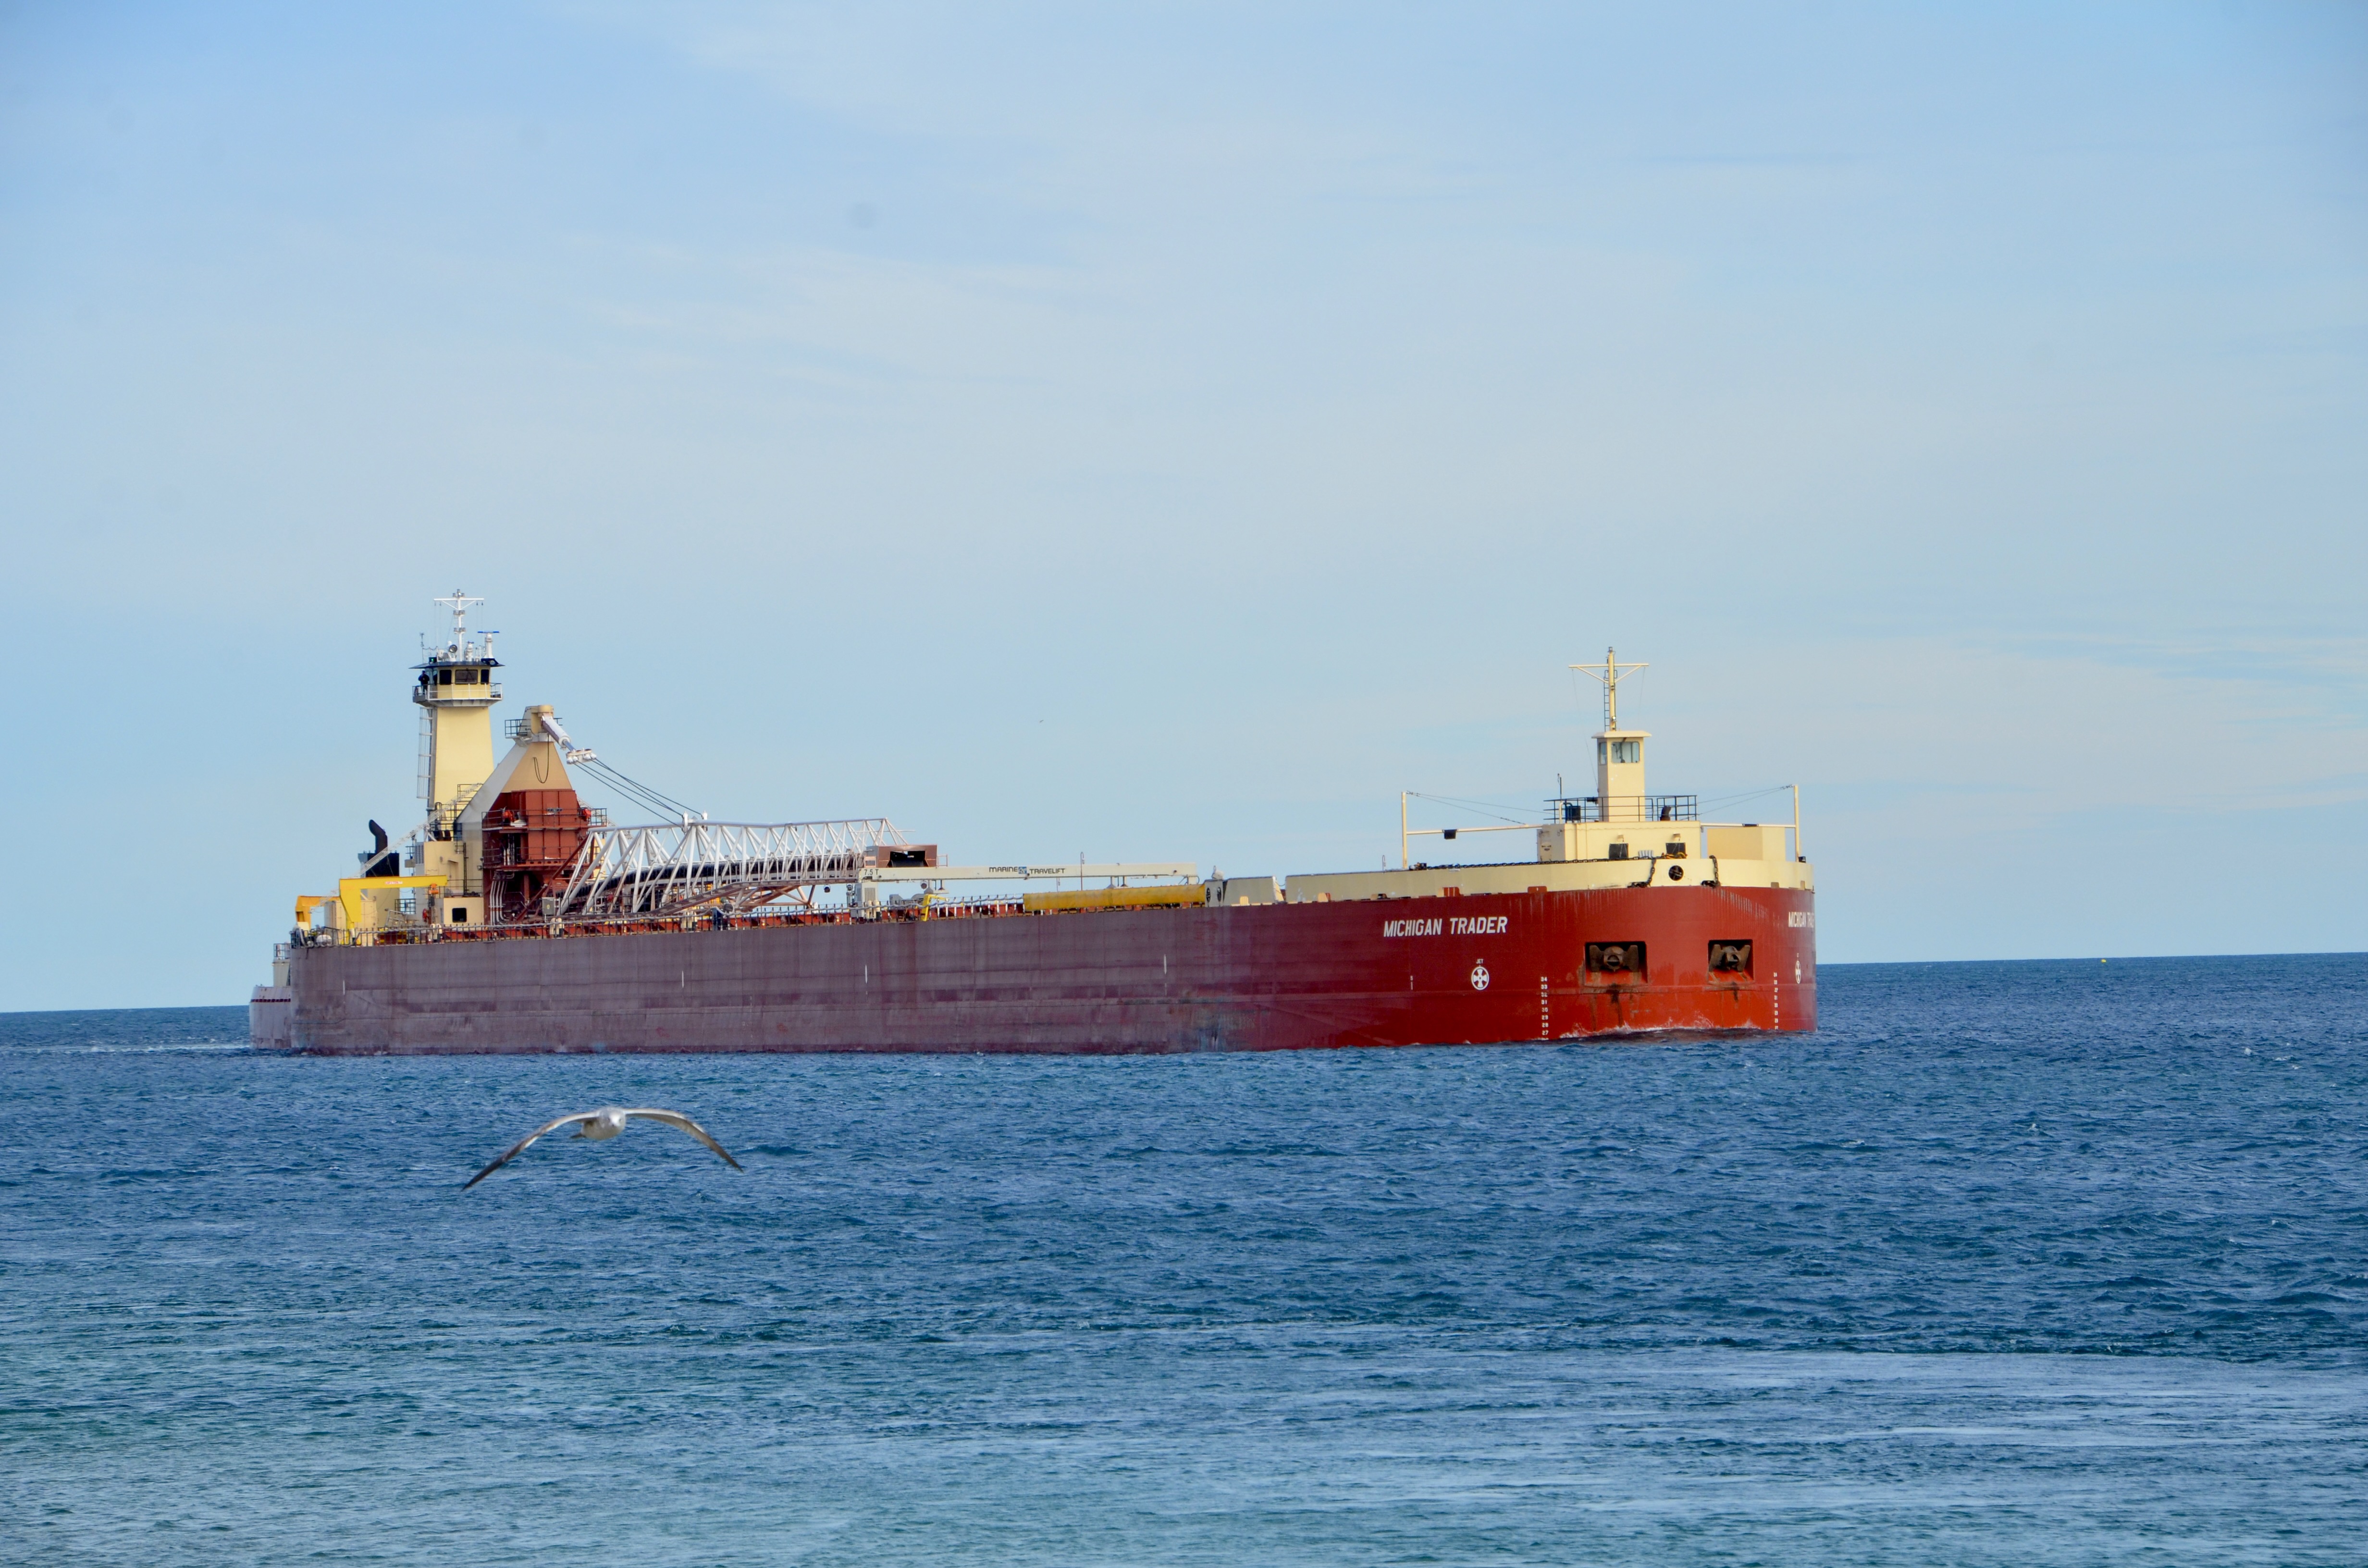 Michigan Trader passing through Port Huron, November